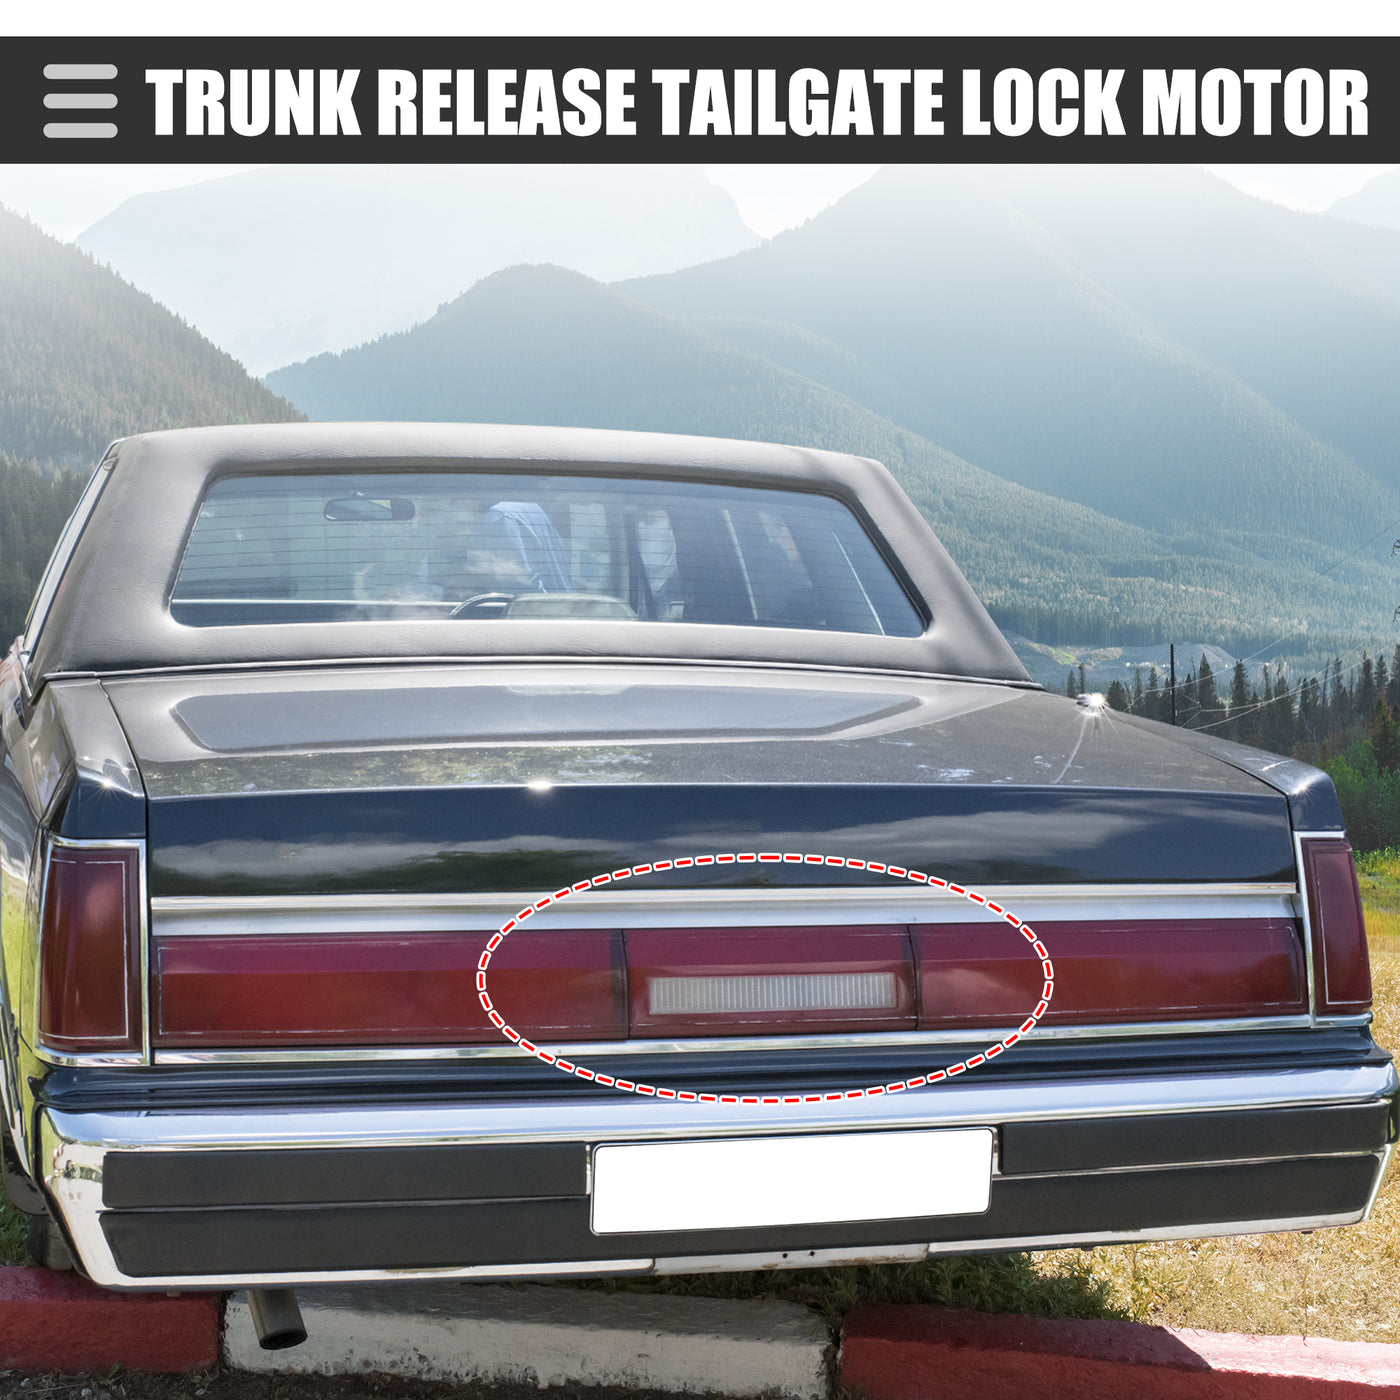 Motoforti Trunk Pull Down Motor, Rear Trunk Release Tailgate Lock Motor, for Lincoln Town Car 1985-2002, Metal Plastic, Black